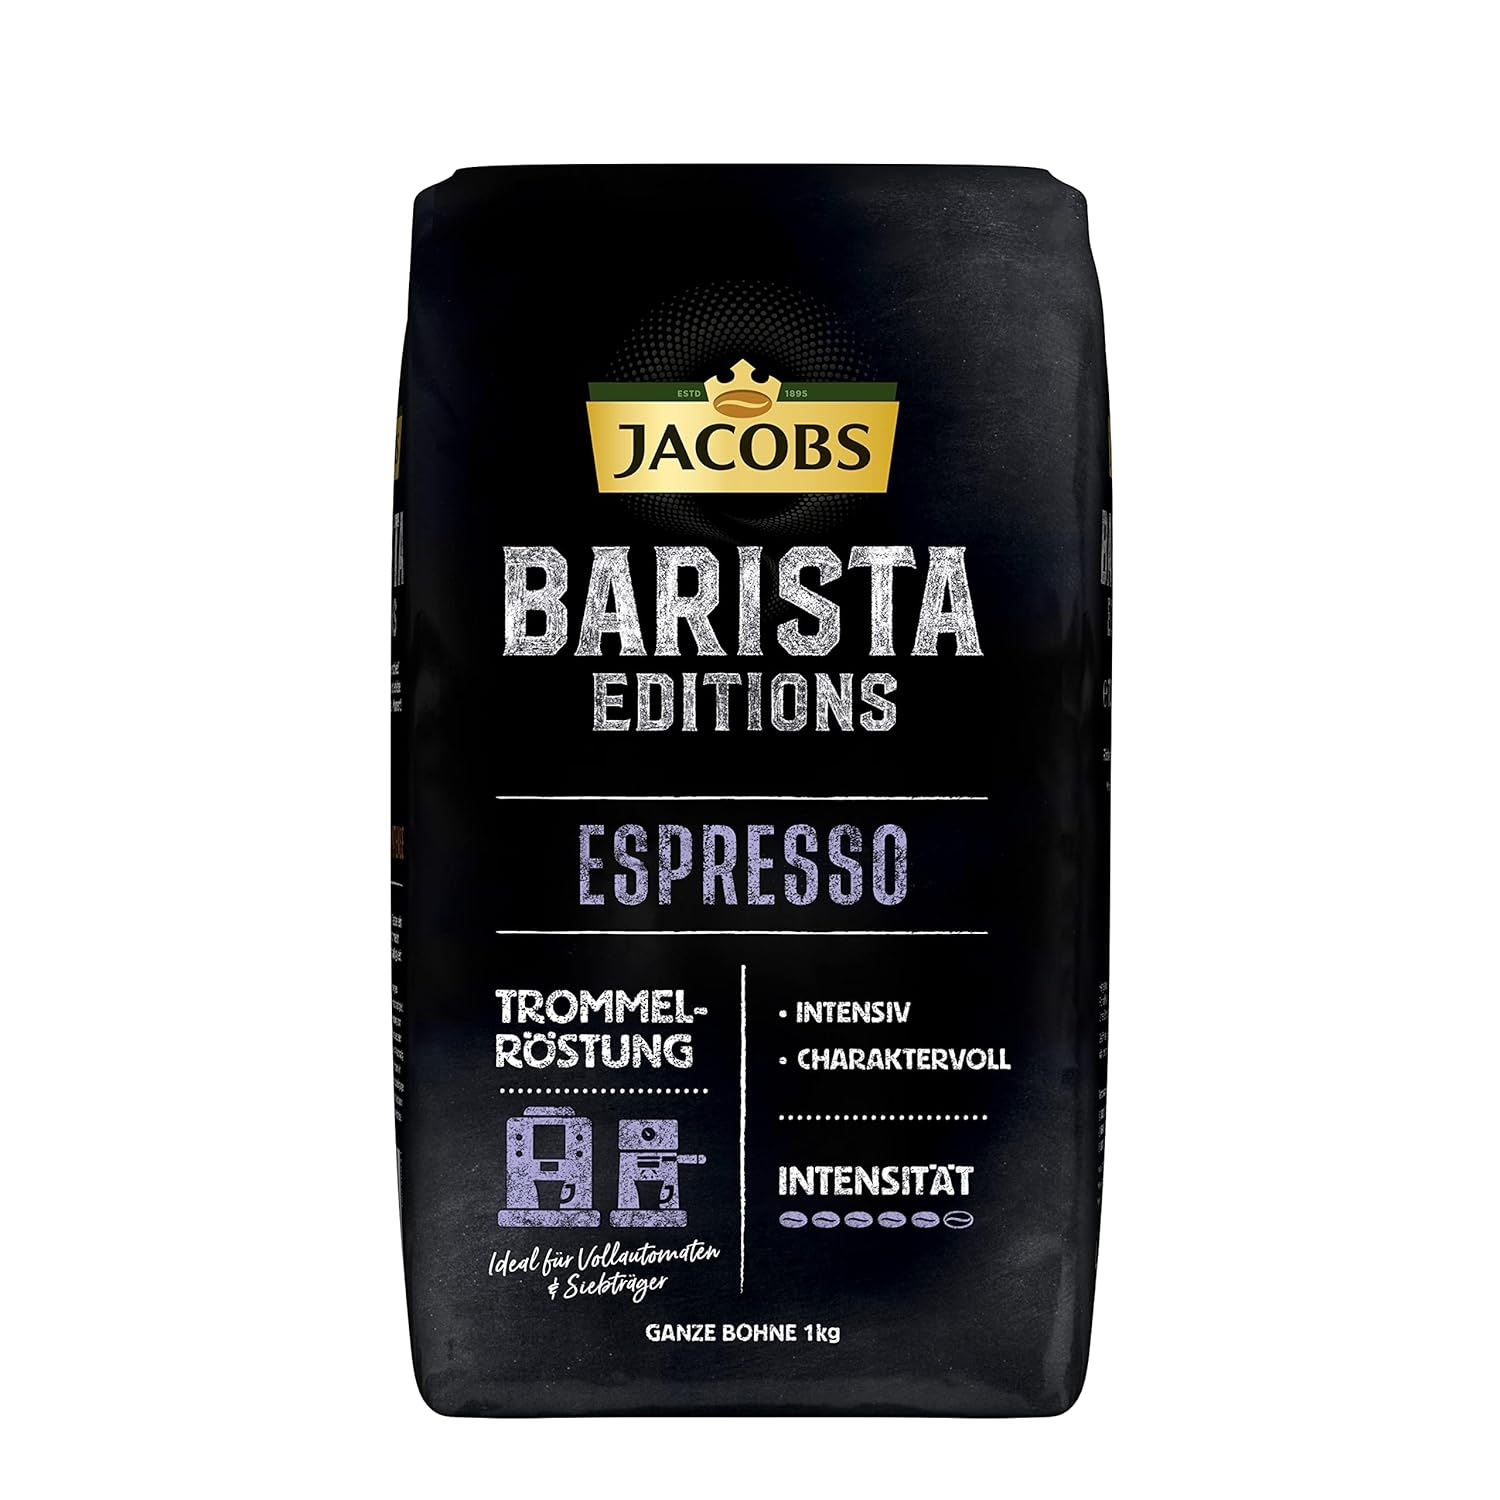 Jacobs Coffee Beans Barista Editions Espresso Beans, 1 kg Bean Coffee